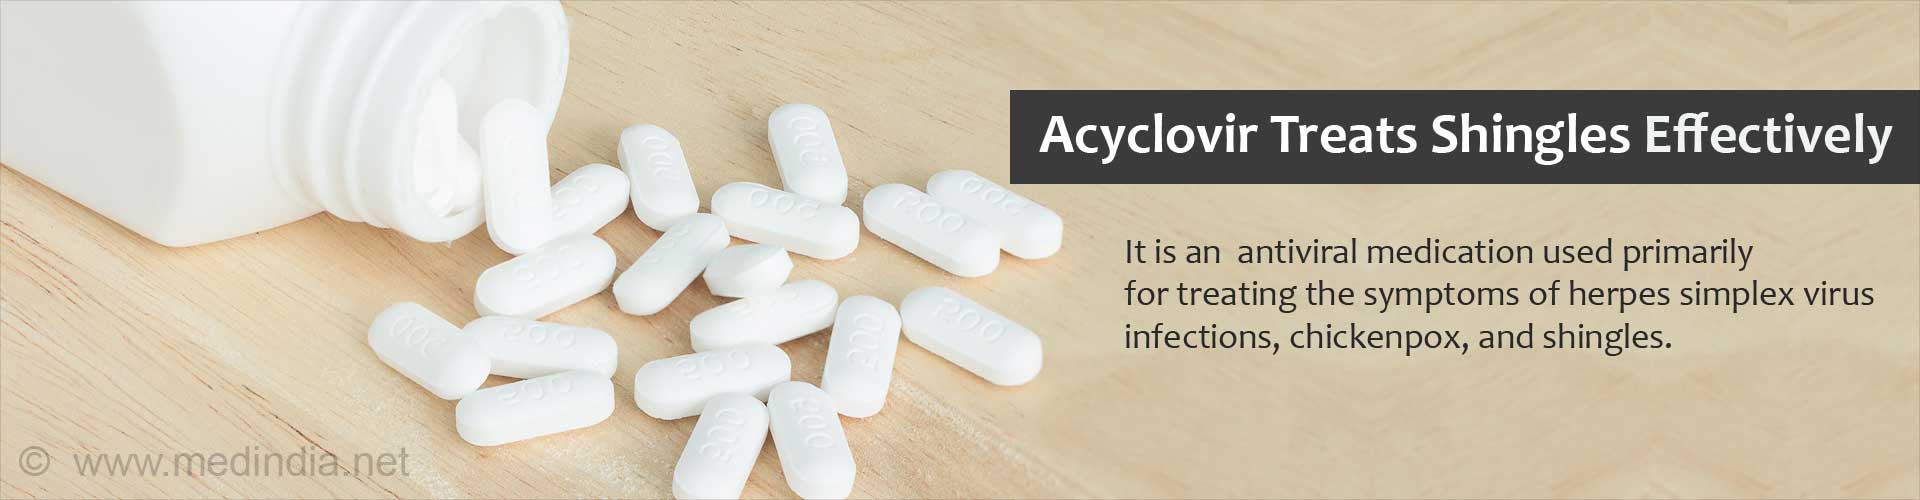 do you have to take acyclovir for shingles